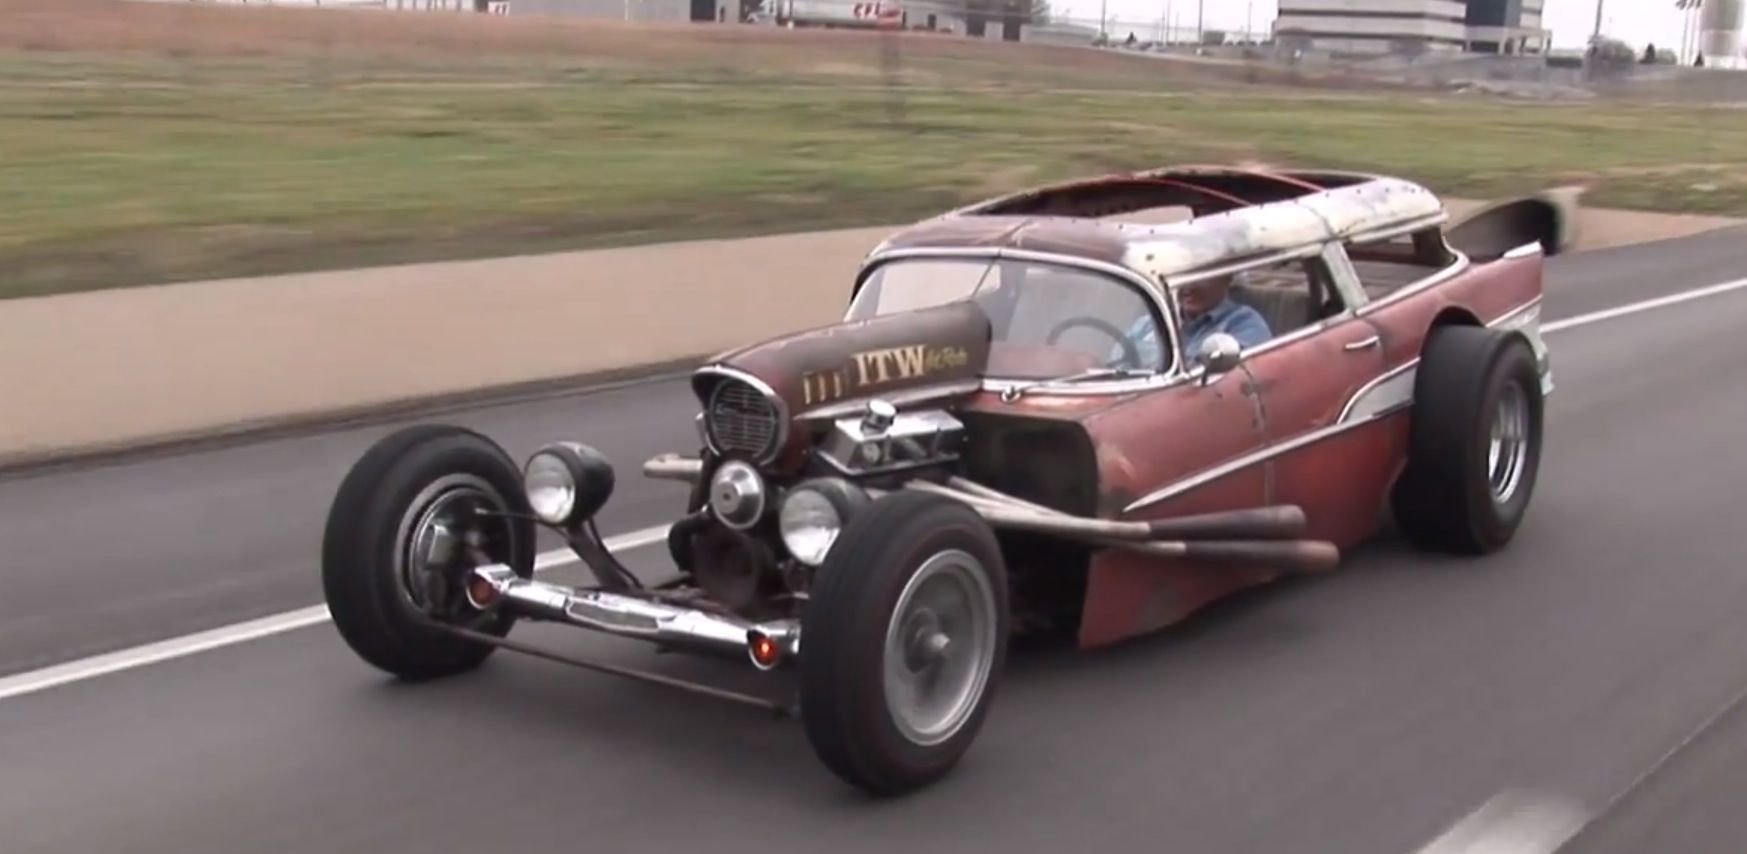 1957-chevrolet-wagon-turned-rat-rod-makes-an-amazing-santa-sled-video-90453_1.jpg